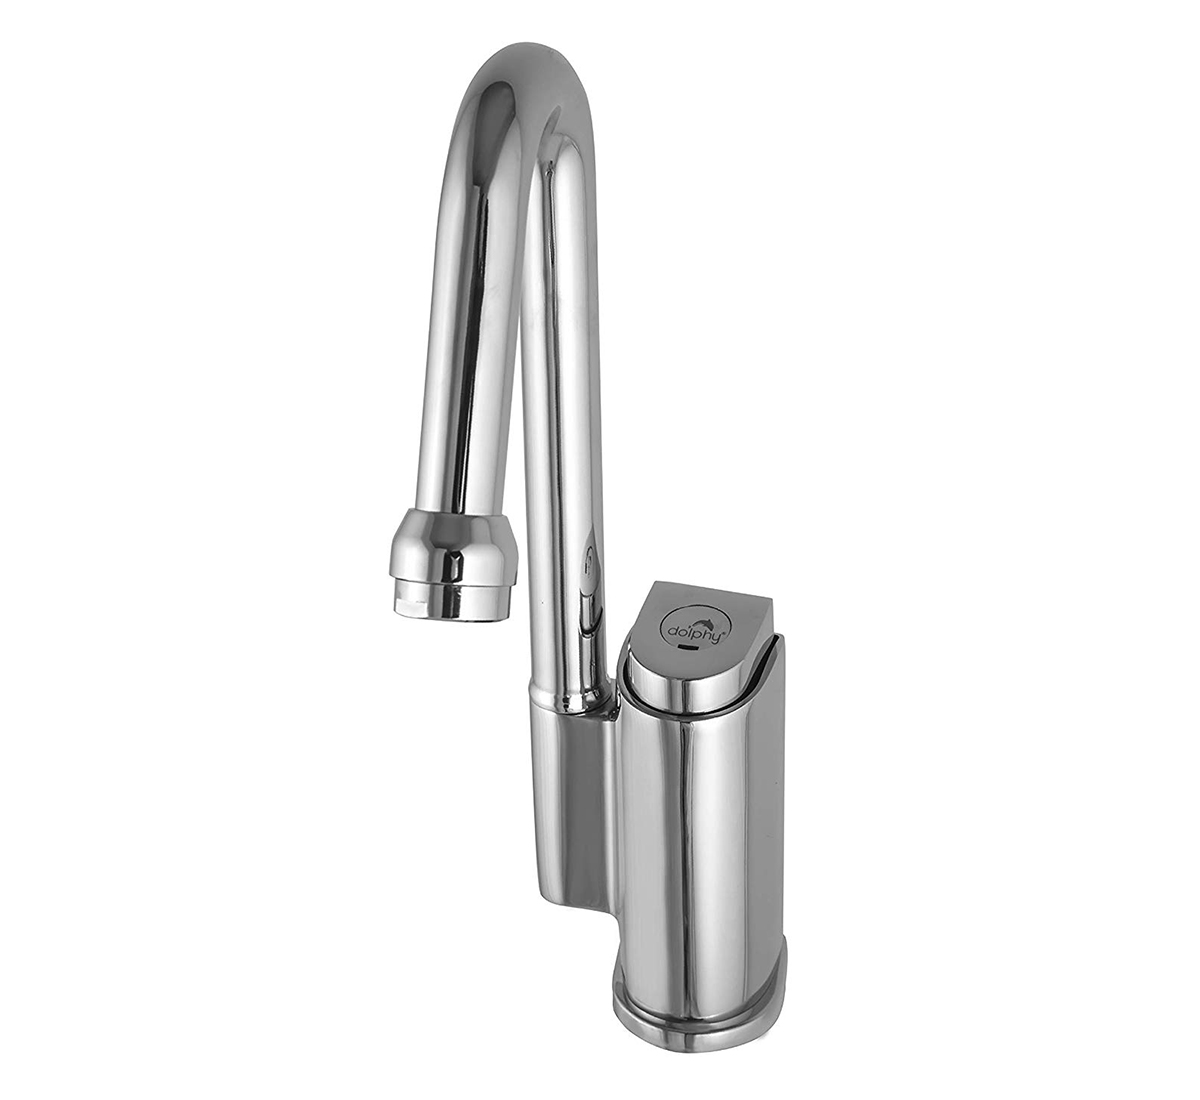 Counter mount self closing sensor tap for basin sink